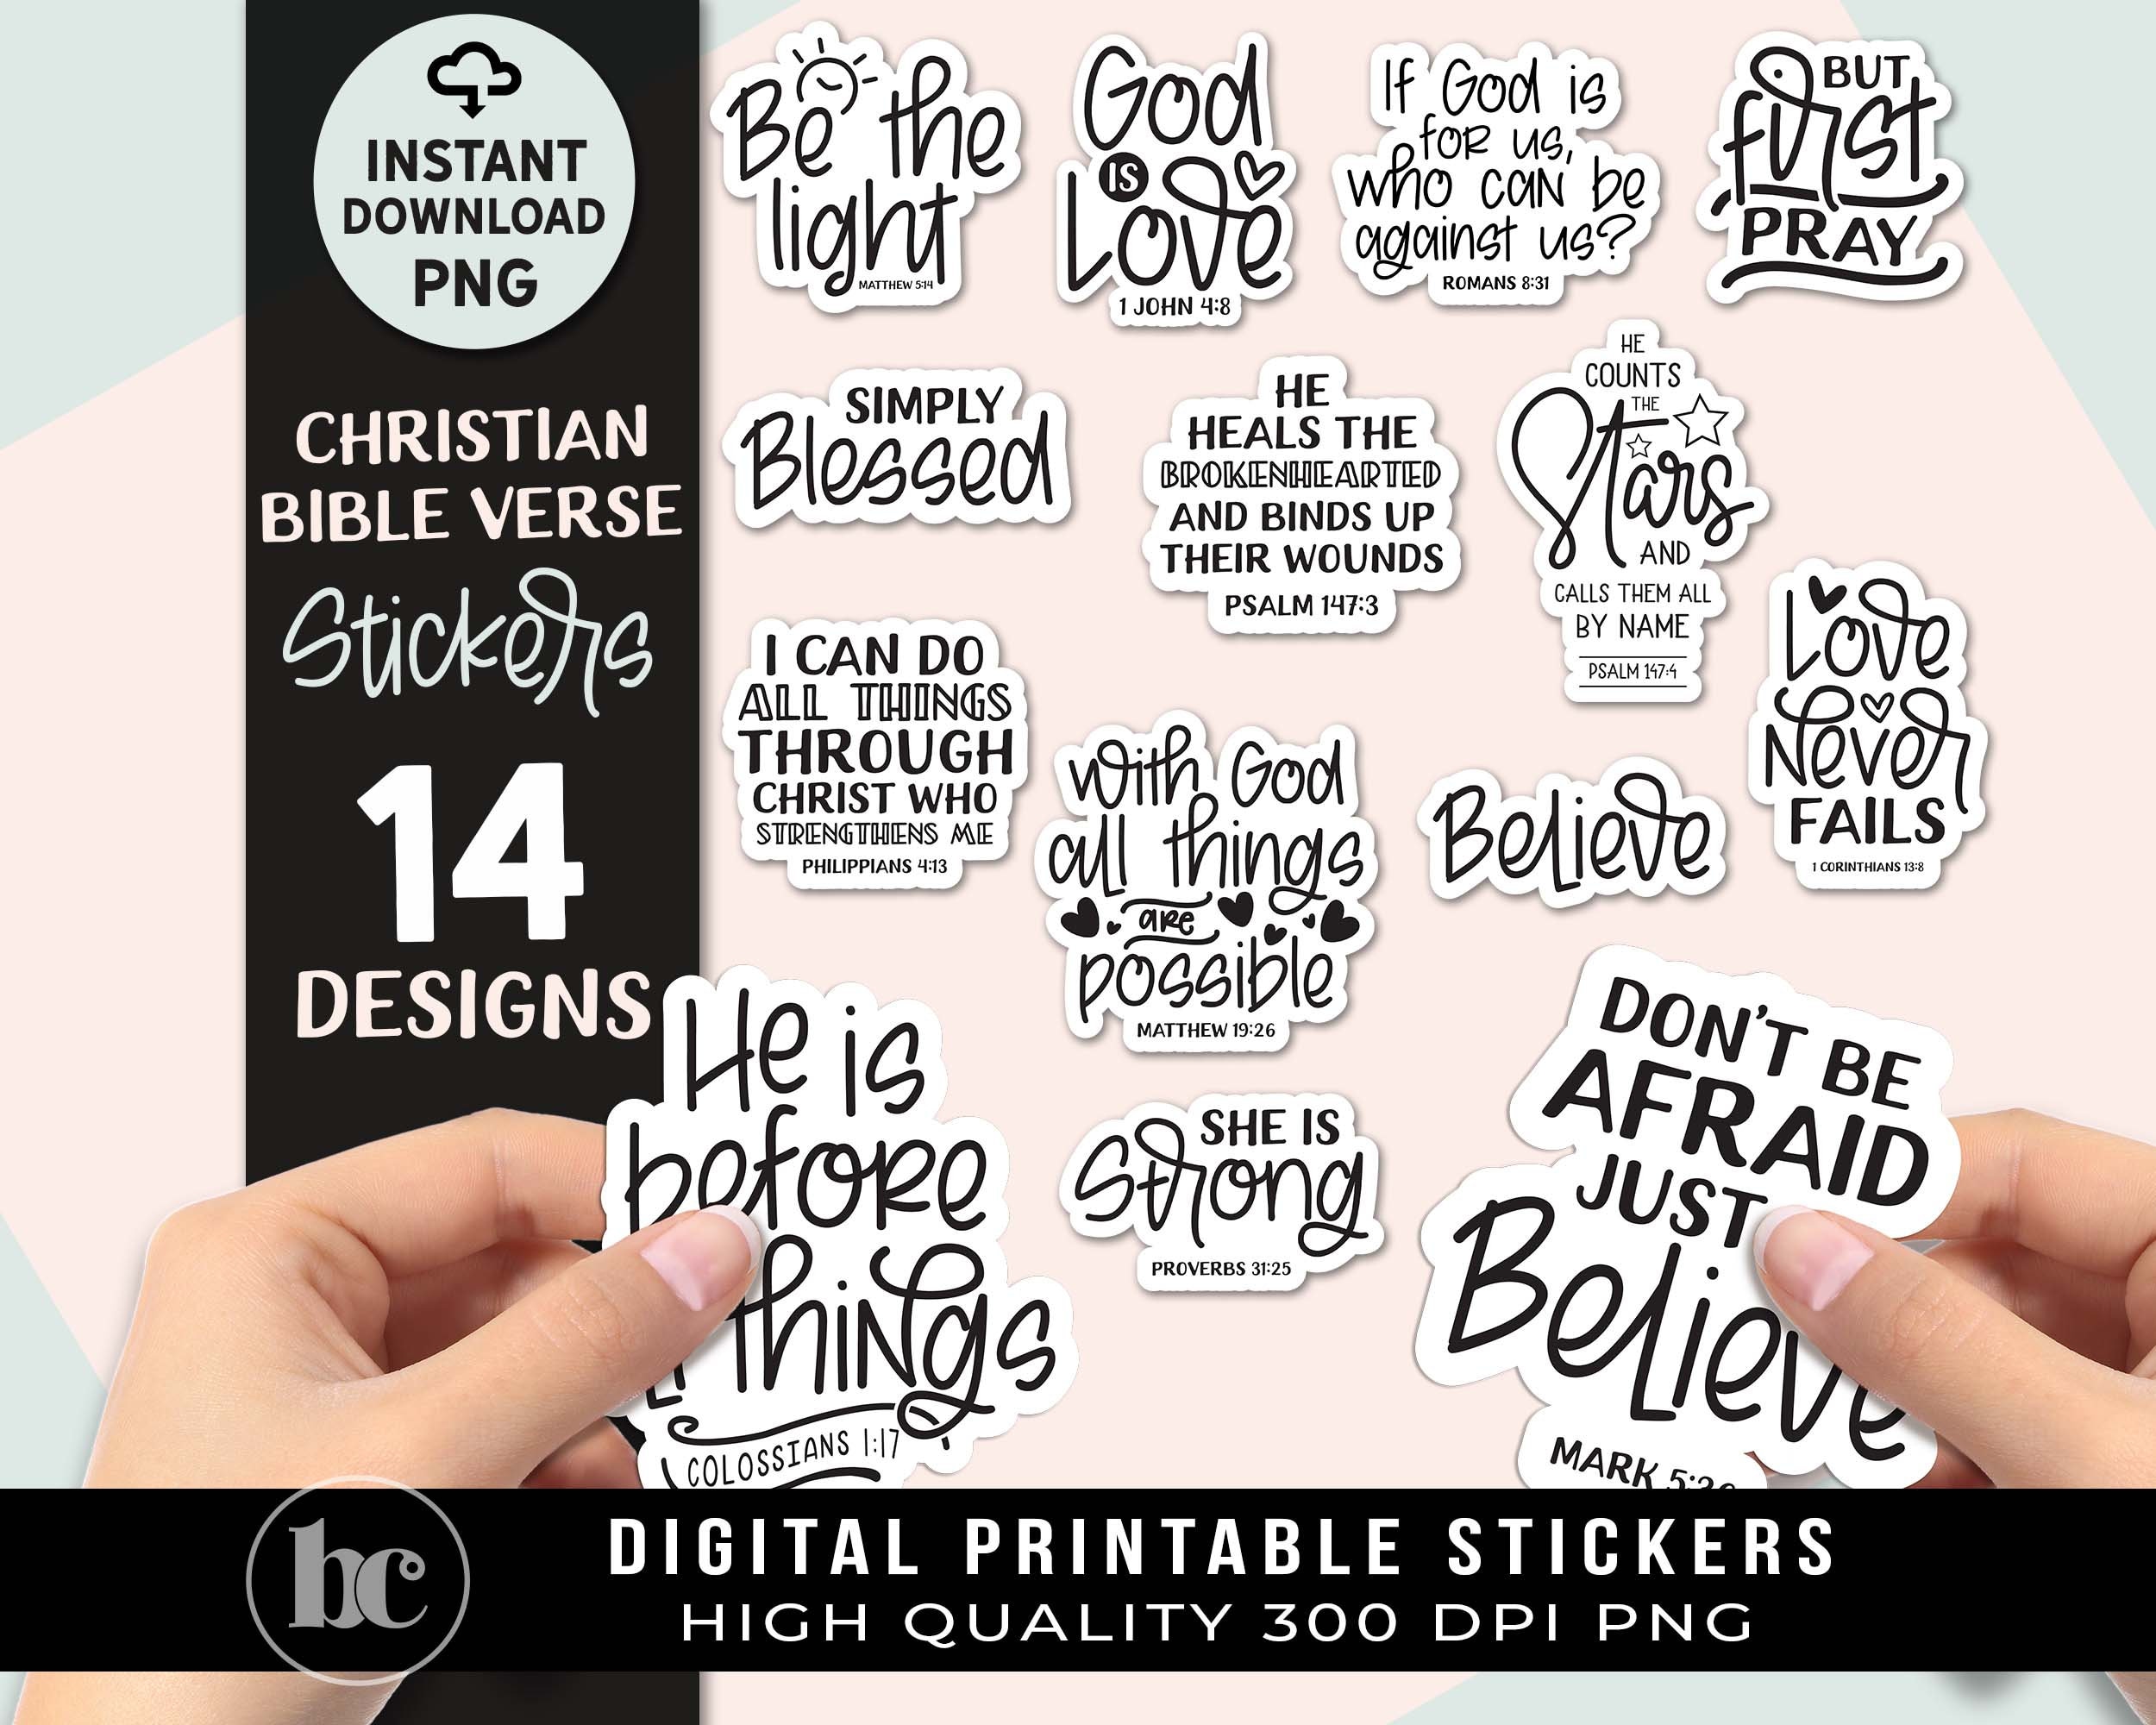 Christian Stickers Svg, Digital Stickers, Bible Svg, Inspirational Sticker  Digital, Recovery Stickers Printable, Printable Sticker Bundle 